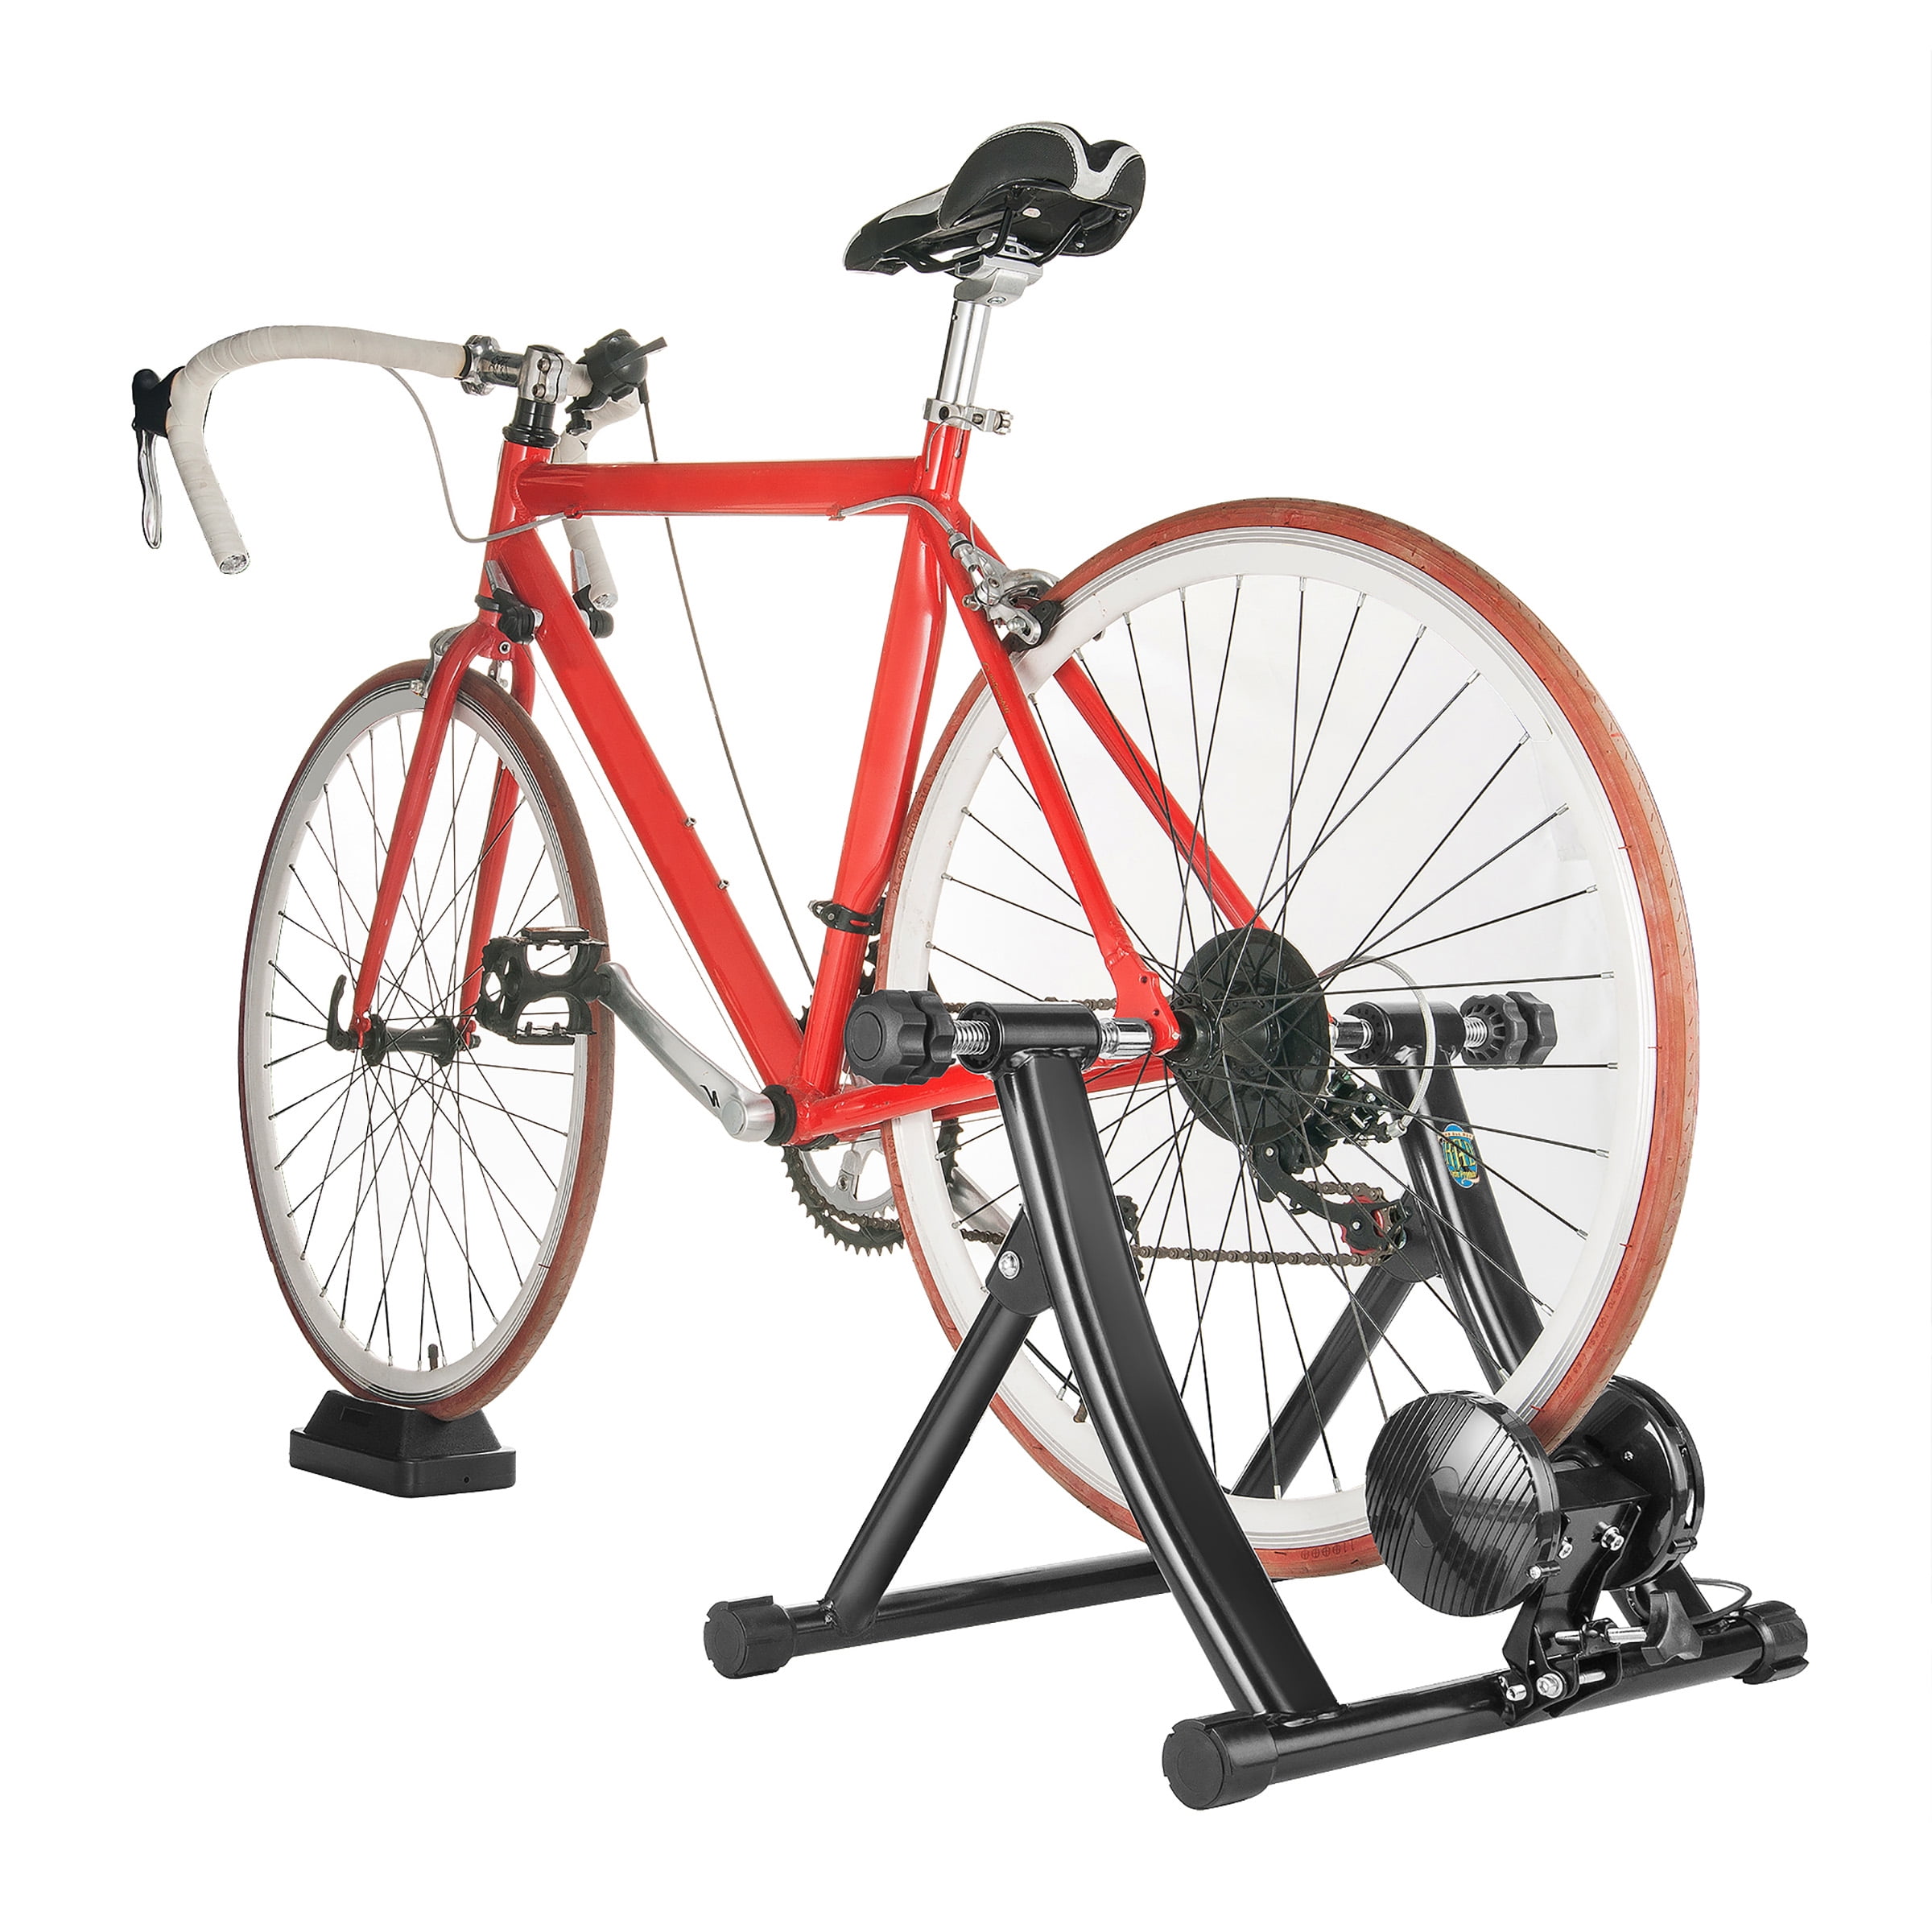 The Elite Bicycle. Bike Equipment. Bicycle Equipment. Pro rad. Rad pro